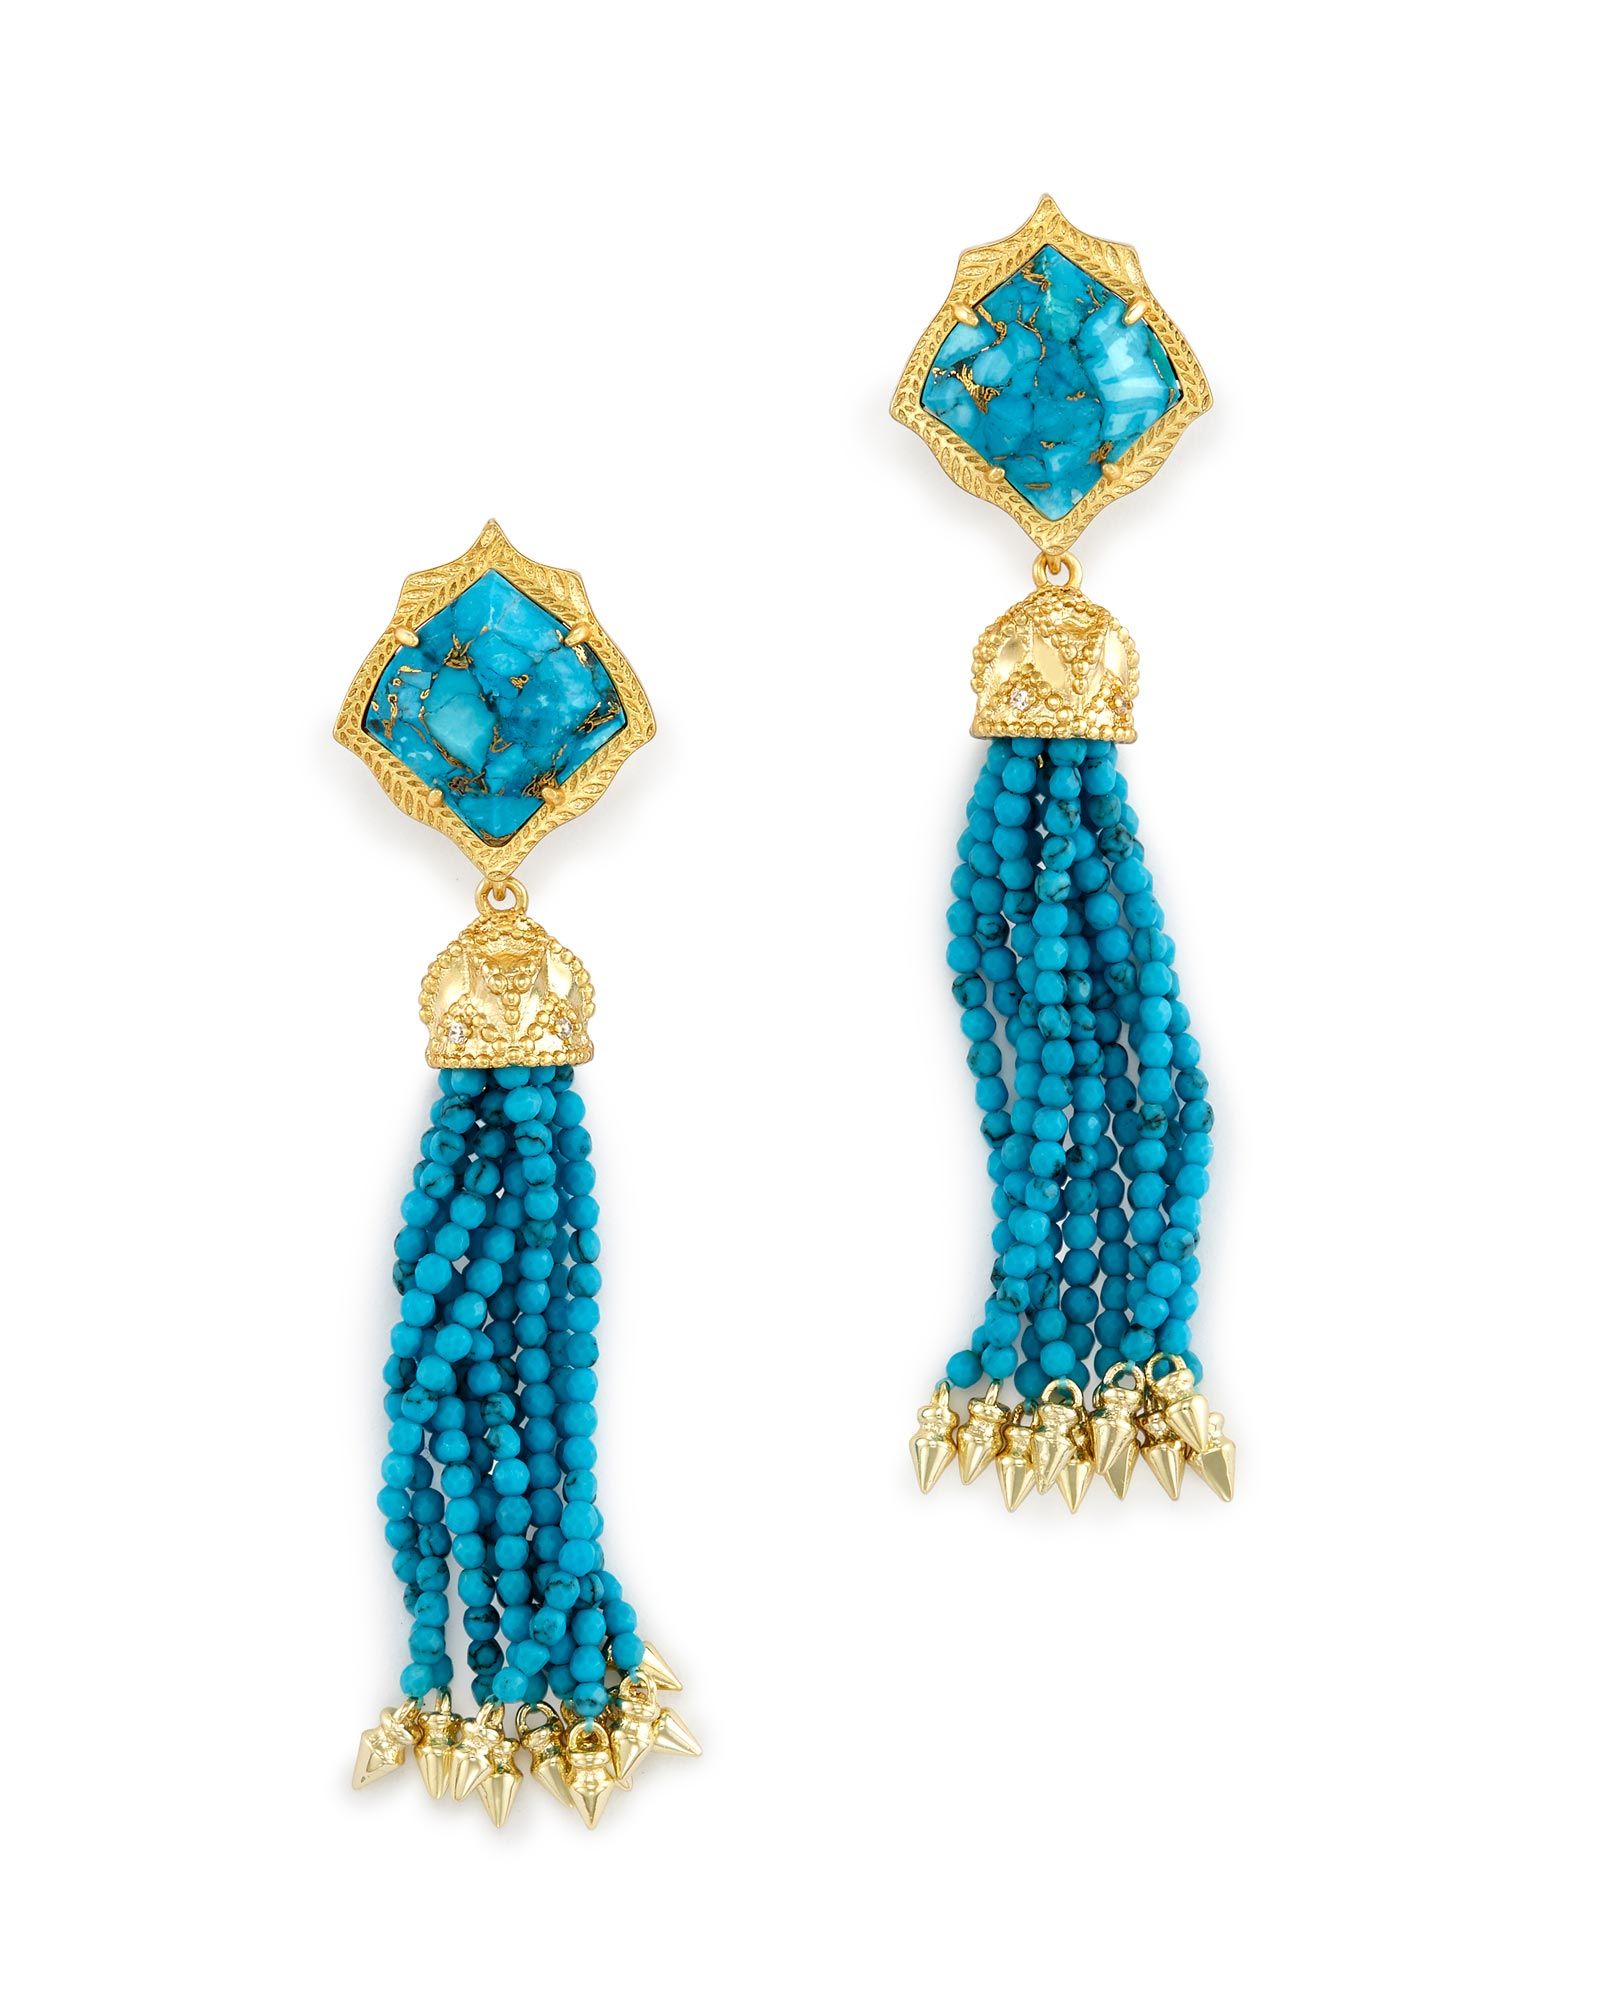 Misha Statement Earrings in Bronze Veined Turquoise | Kendra Scott